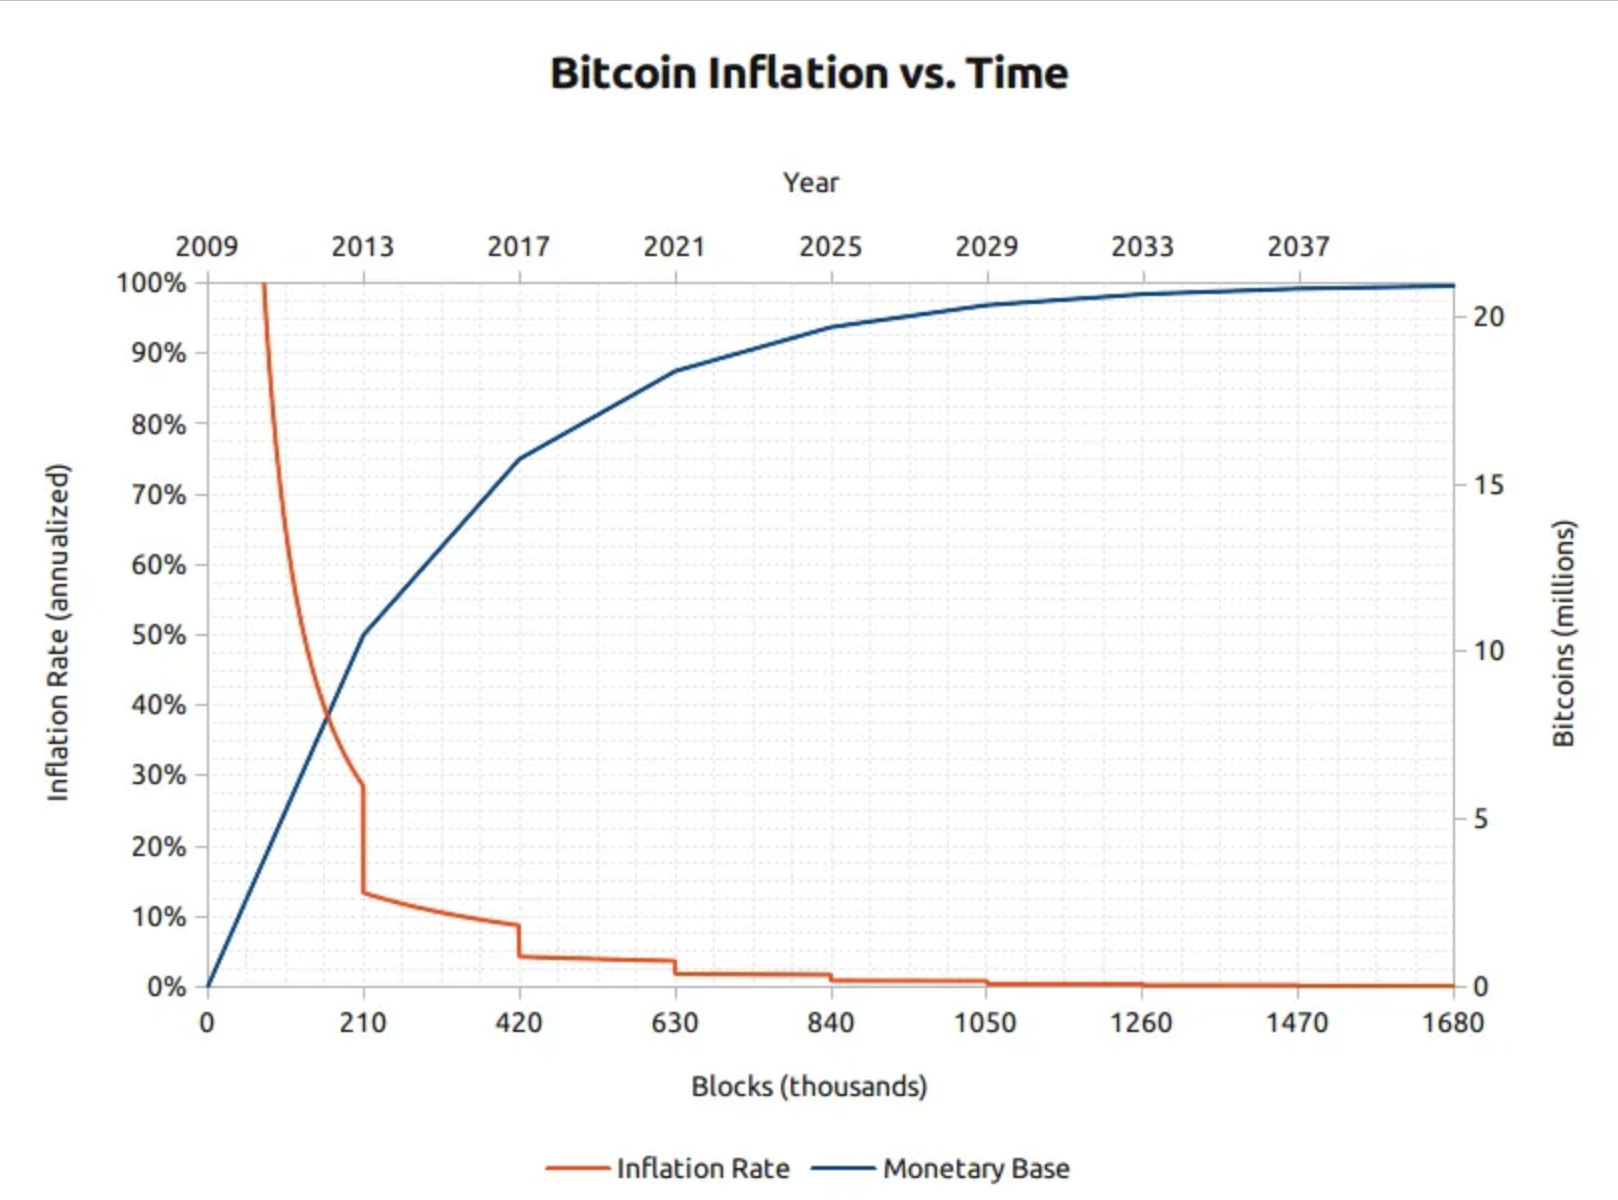 Bitcoin inflation schedule